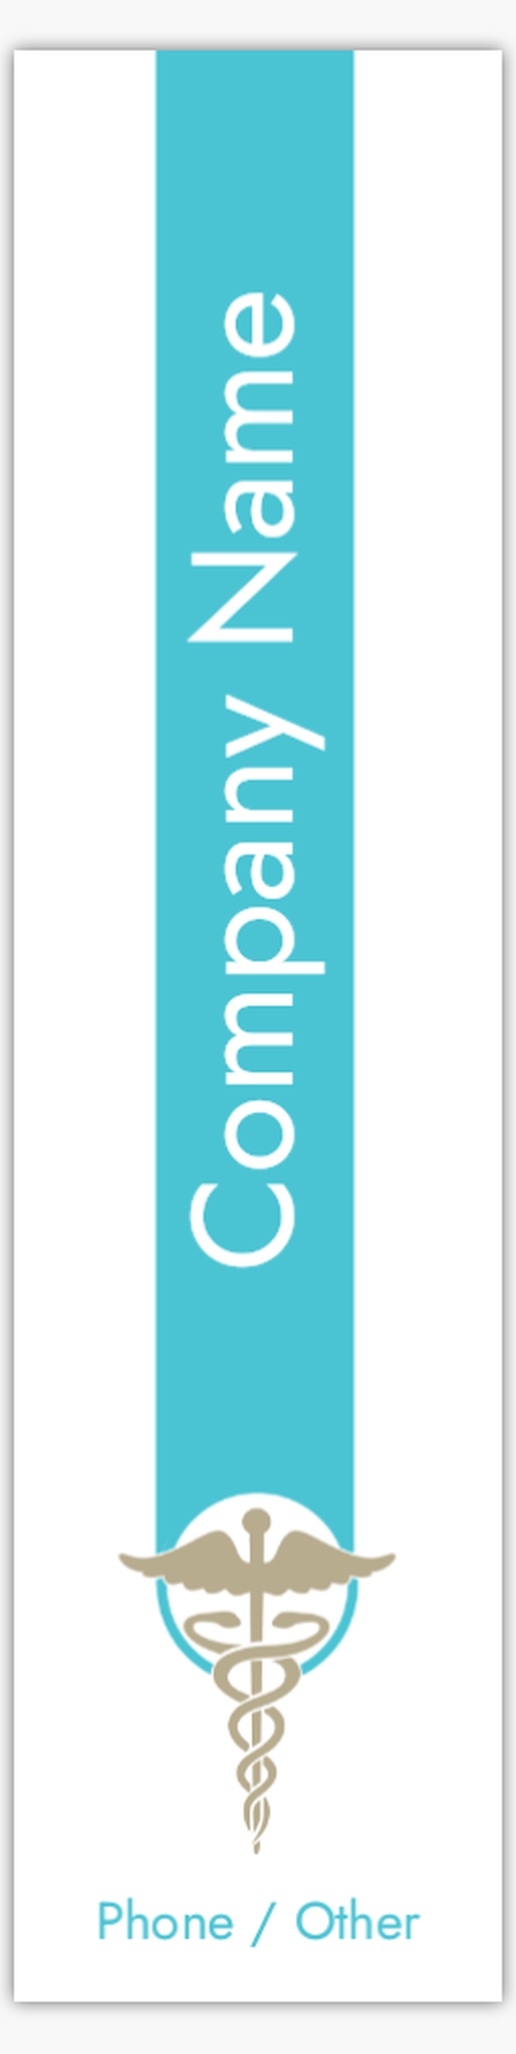 A logo médical marchio medico blue cream design